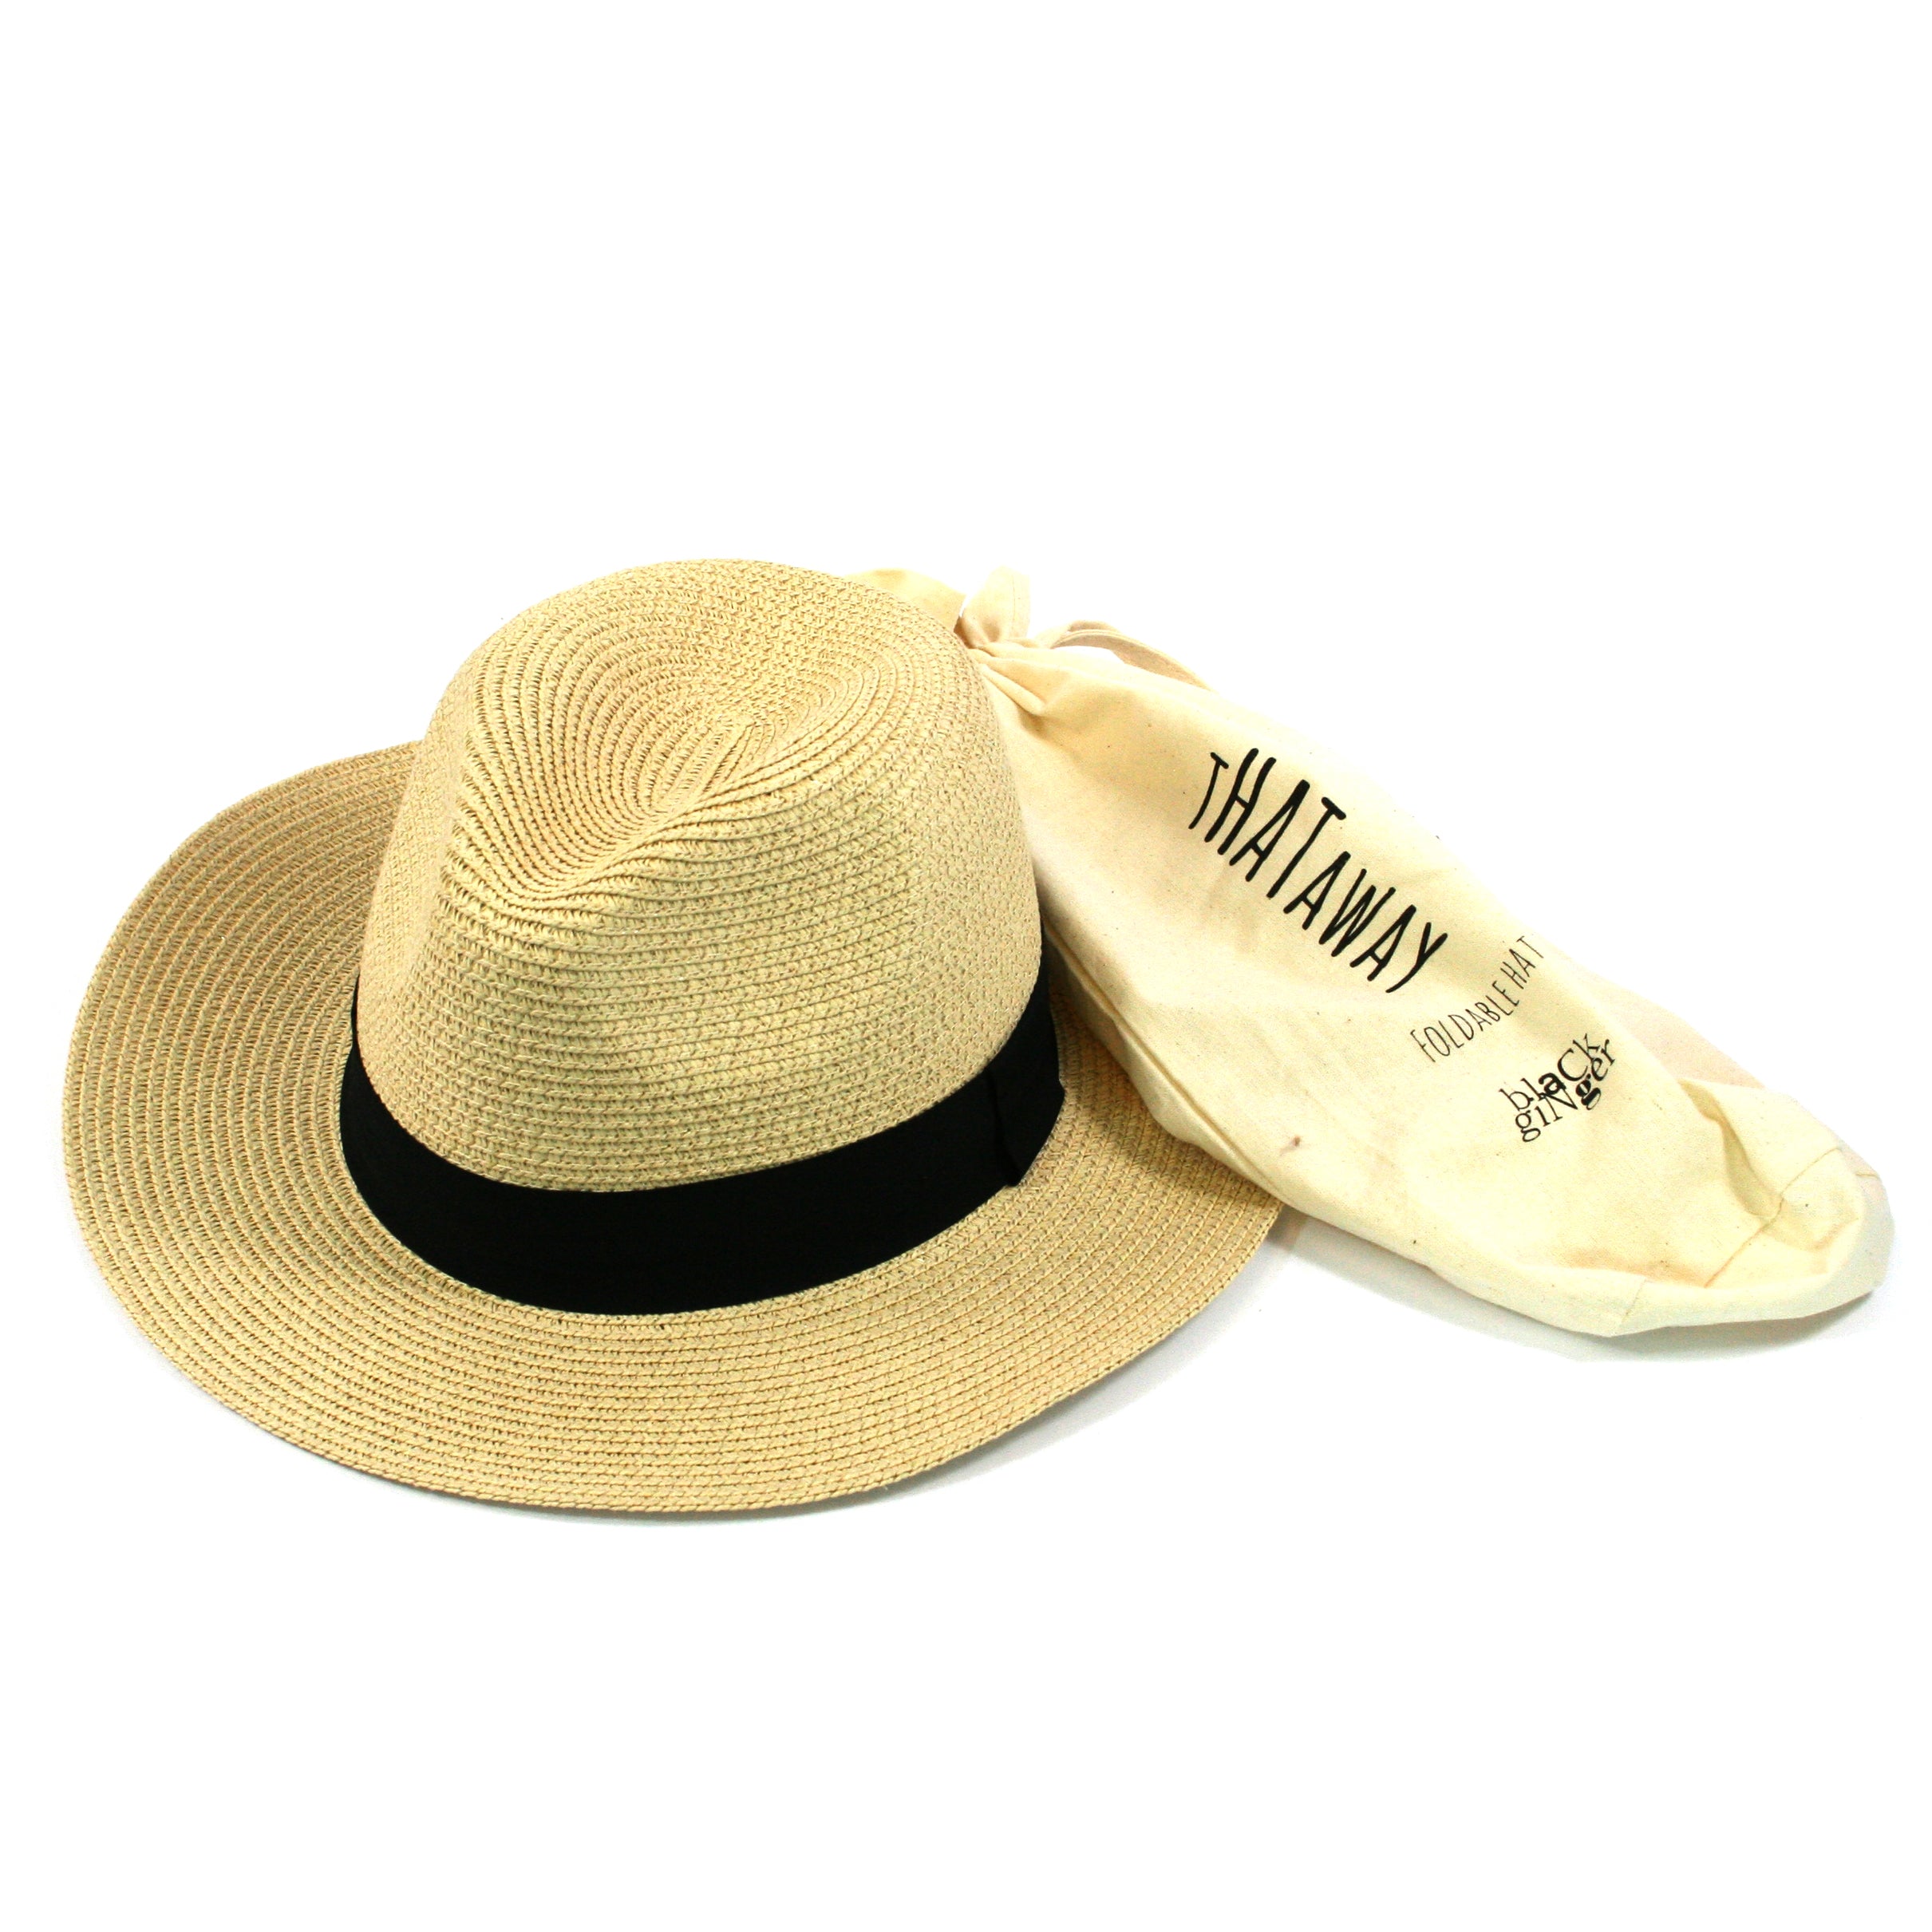 Panama Style Foldable Sun Hat in Bag  - Large (59cm)